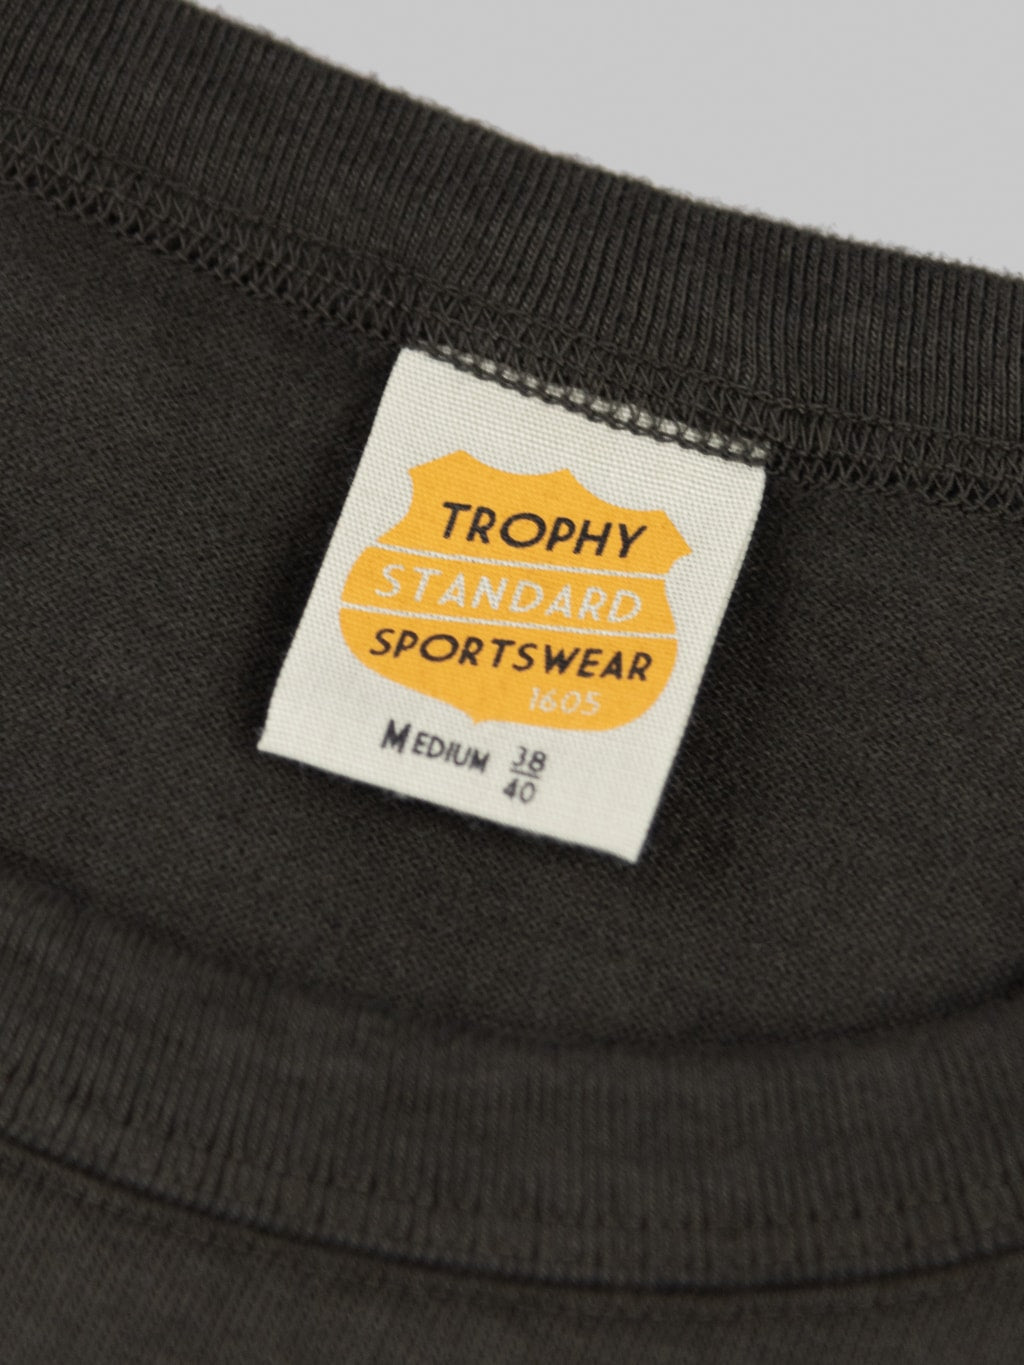 trophy clothing od pocket tee black interior tag